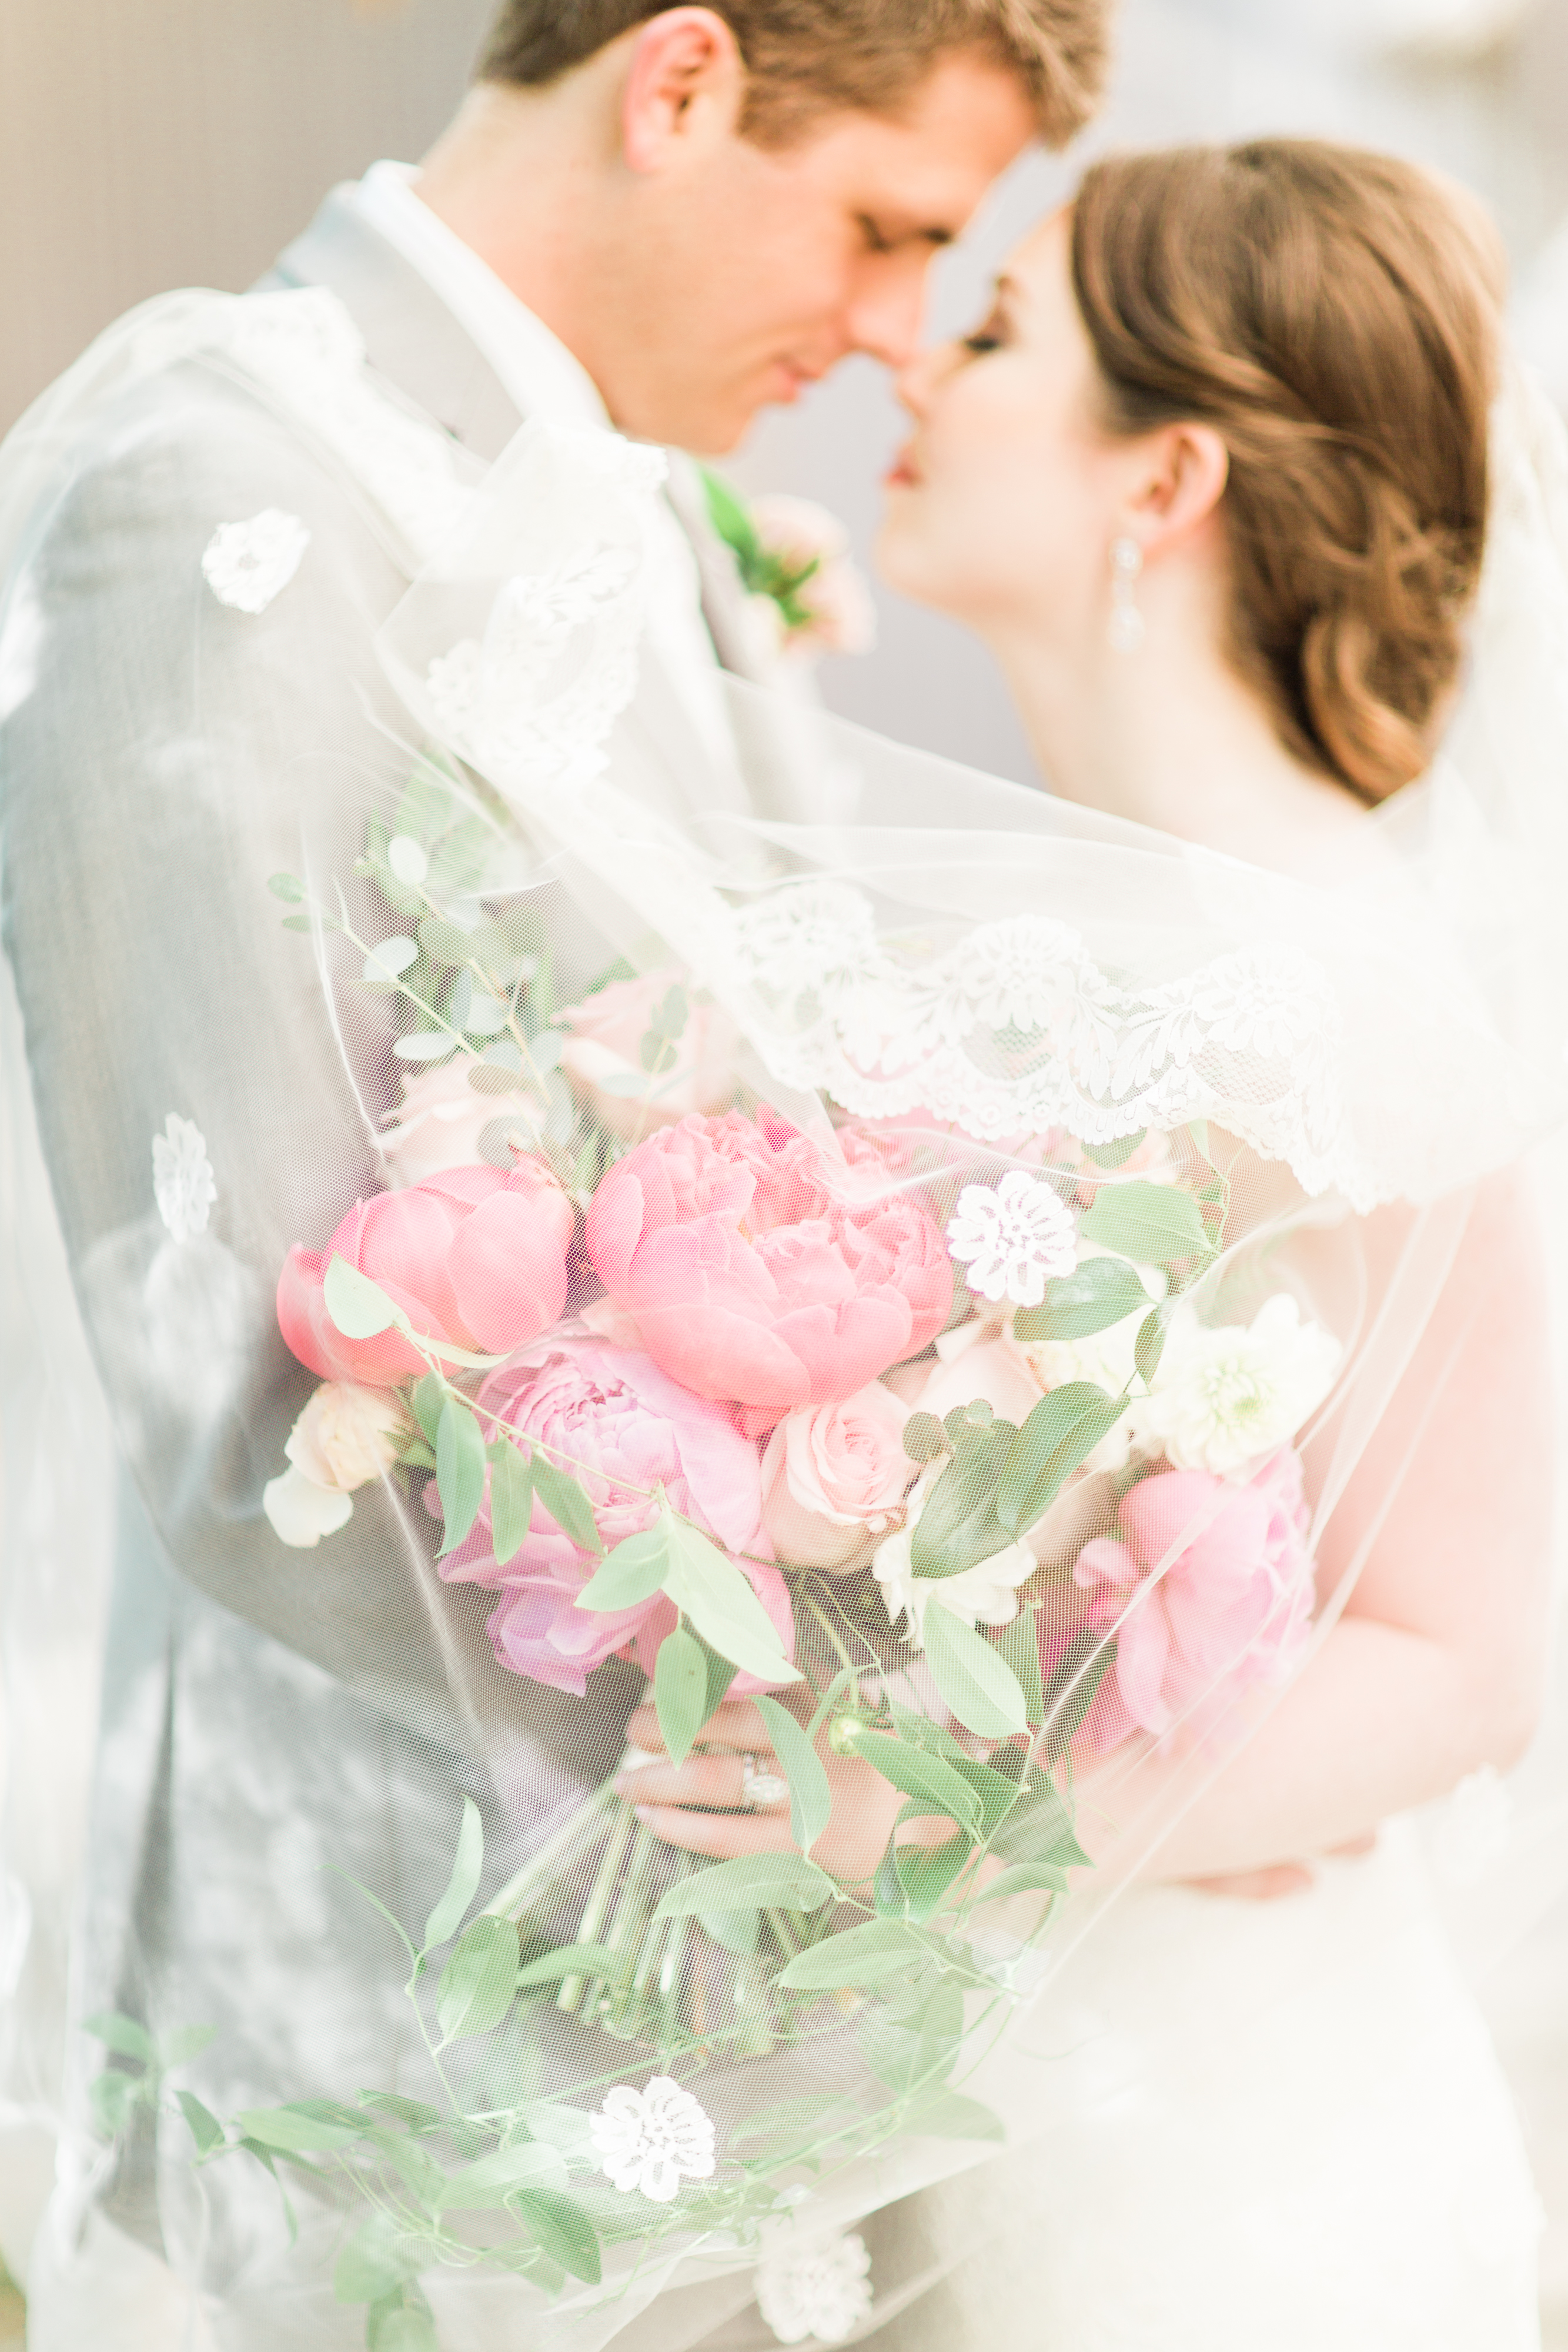 DFW Wedding Florist: A Stylish Soiree | Kristin + Michael Wedding Flowers